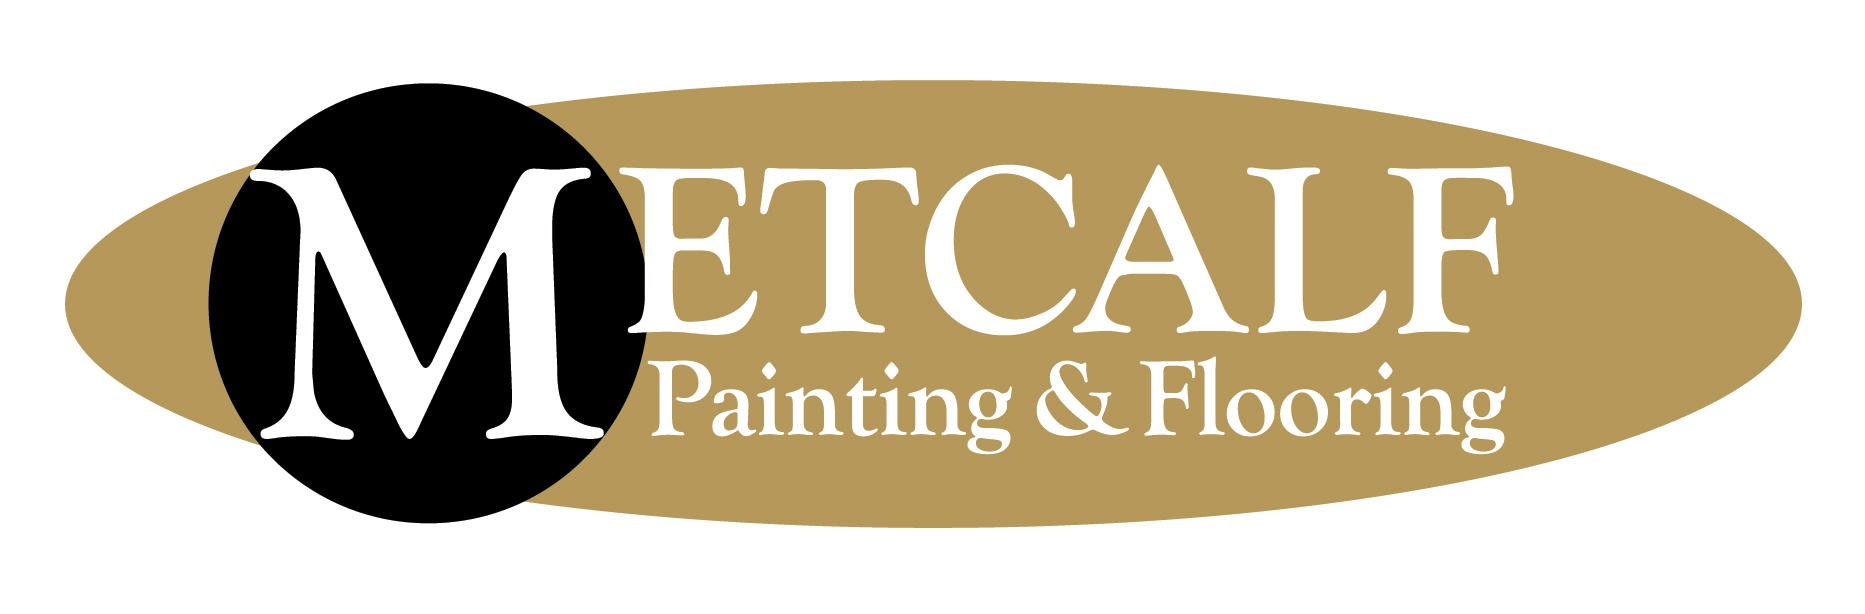 Metcalf Painting & Flooring Logo